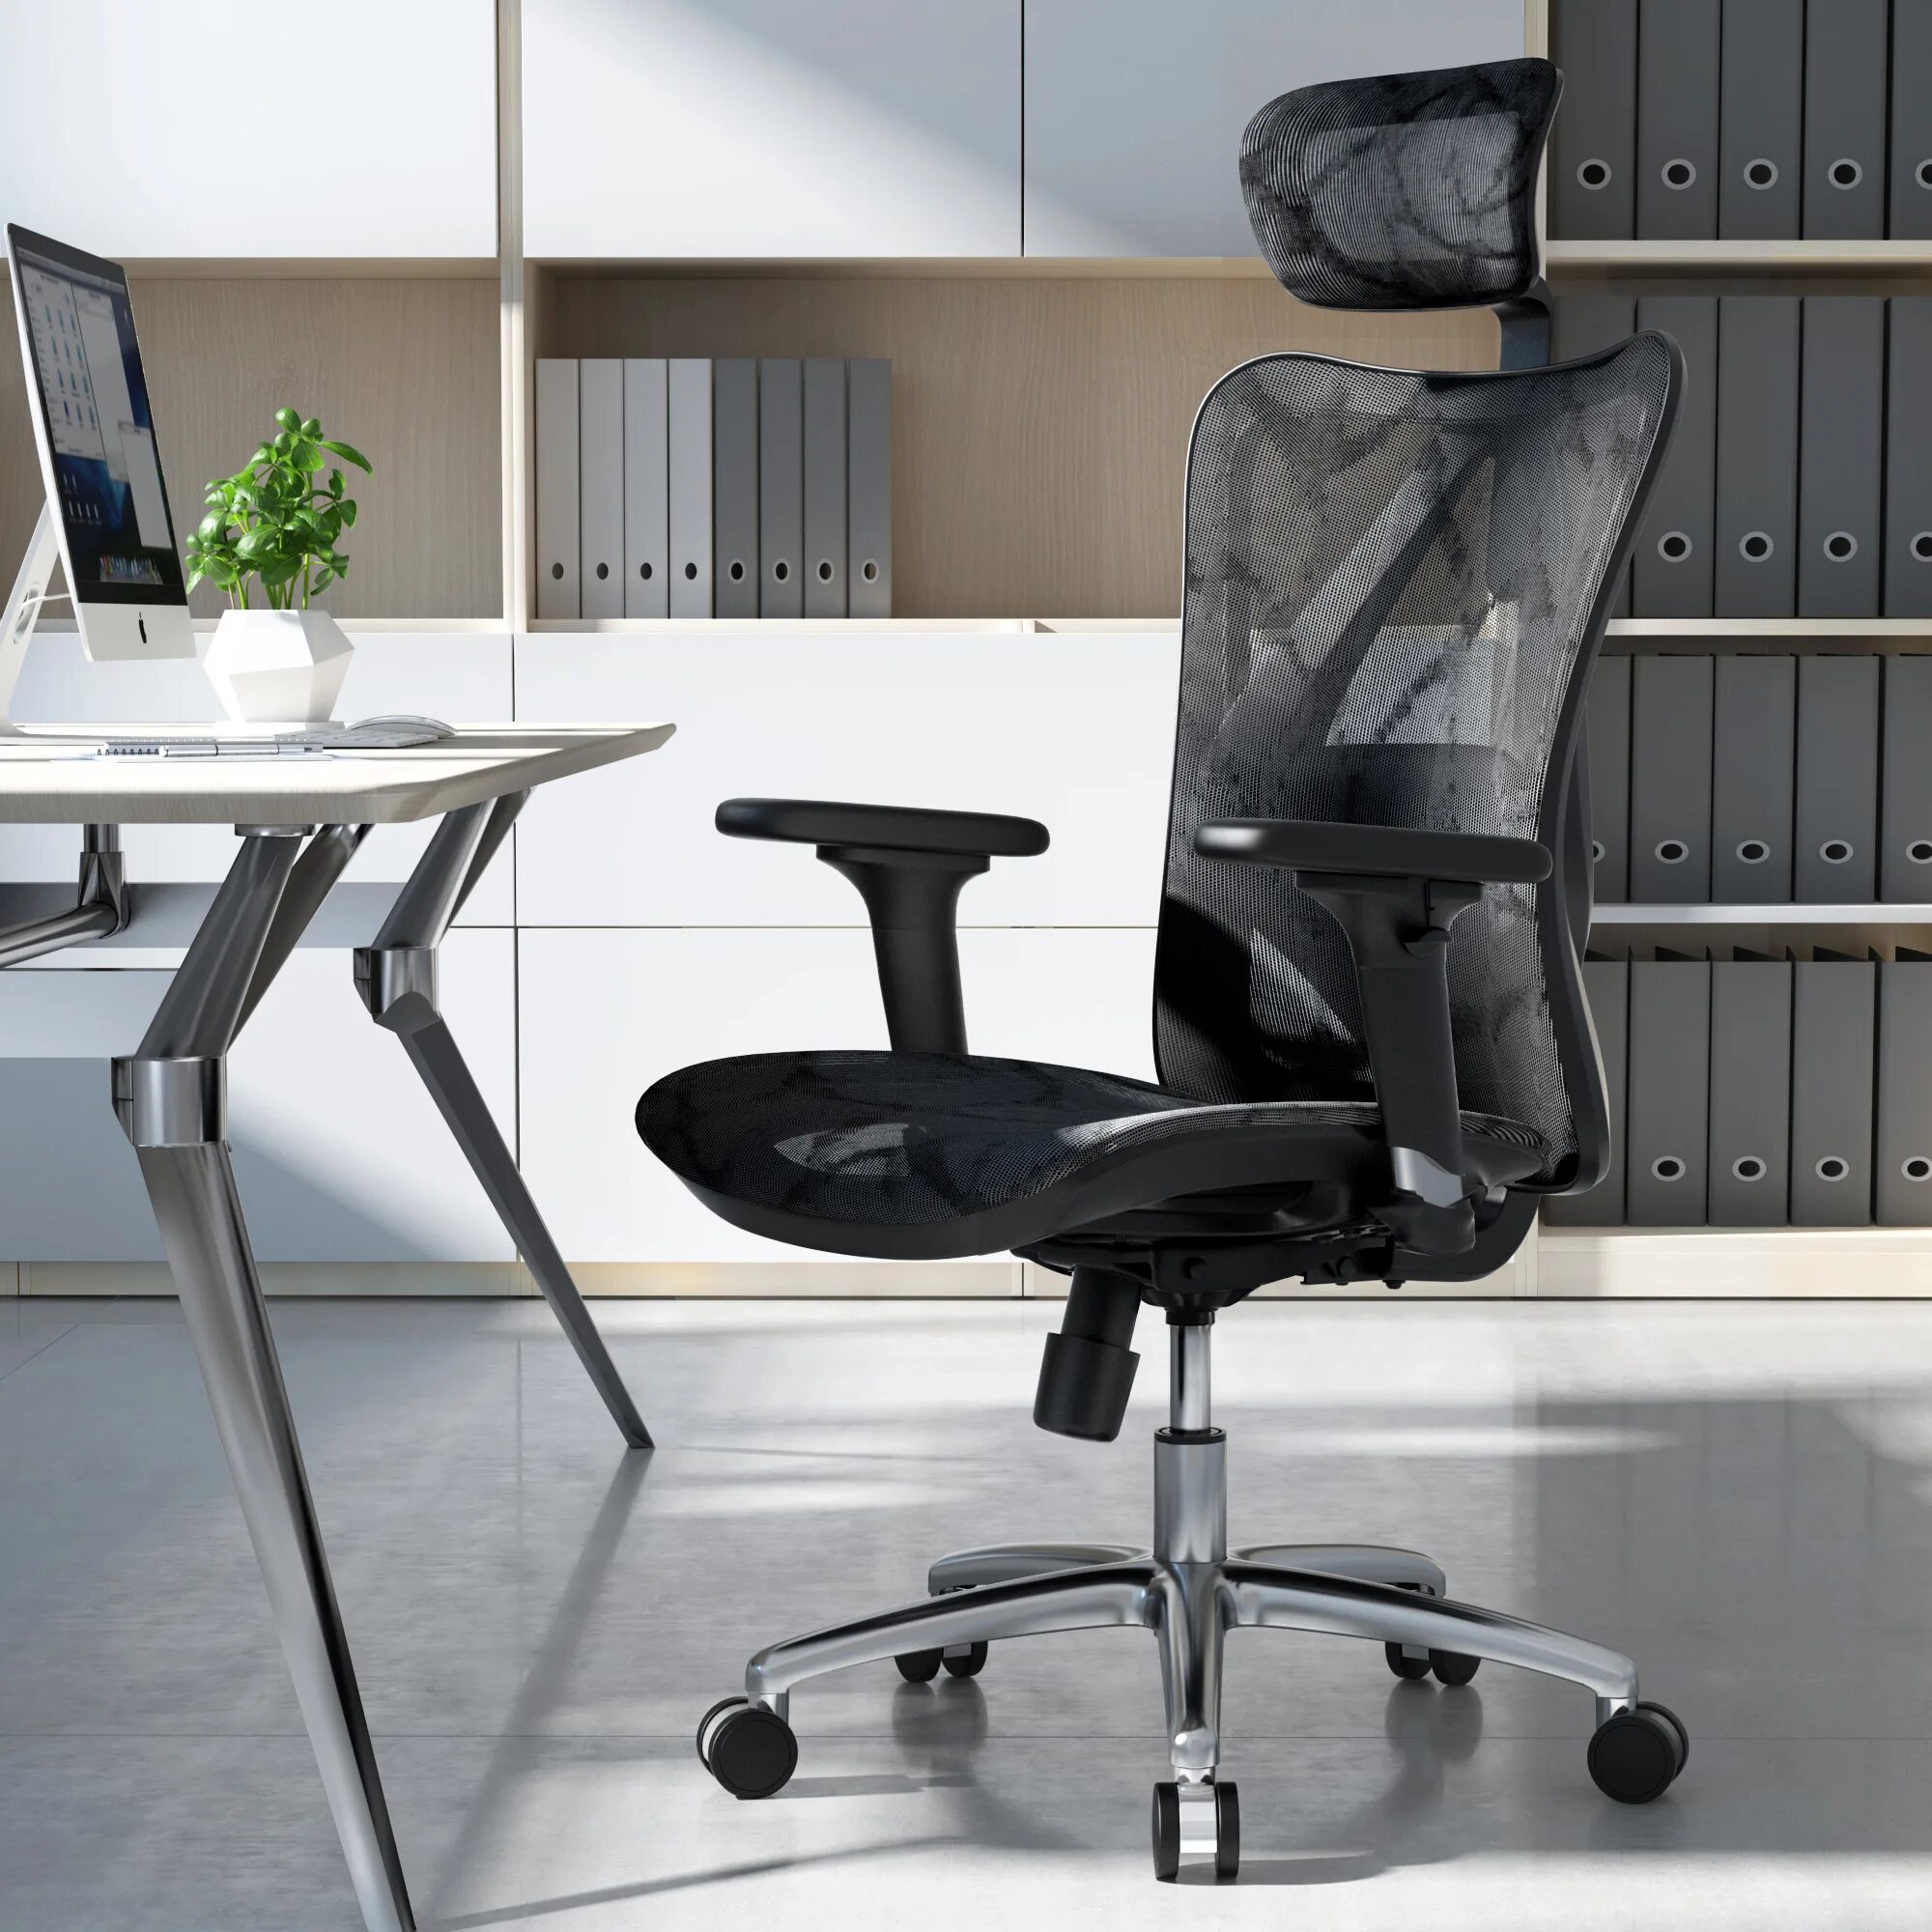 Кресло Ergonomic Chair. Sihoo Ergonomic Office Chair. Sihoo кресло. Кресло aiidoits Ergonomic Office Chair в-100.